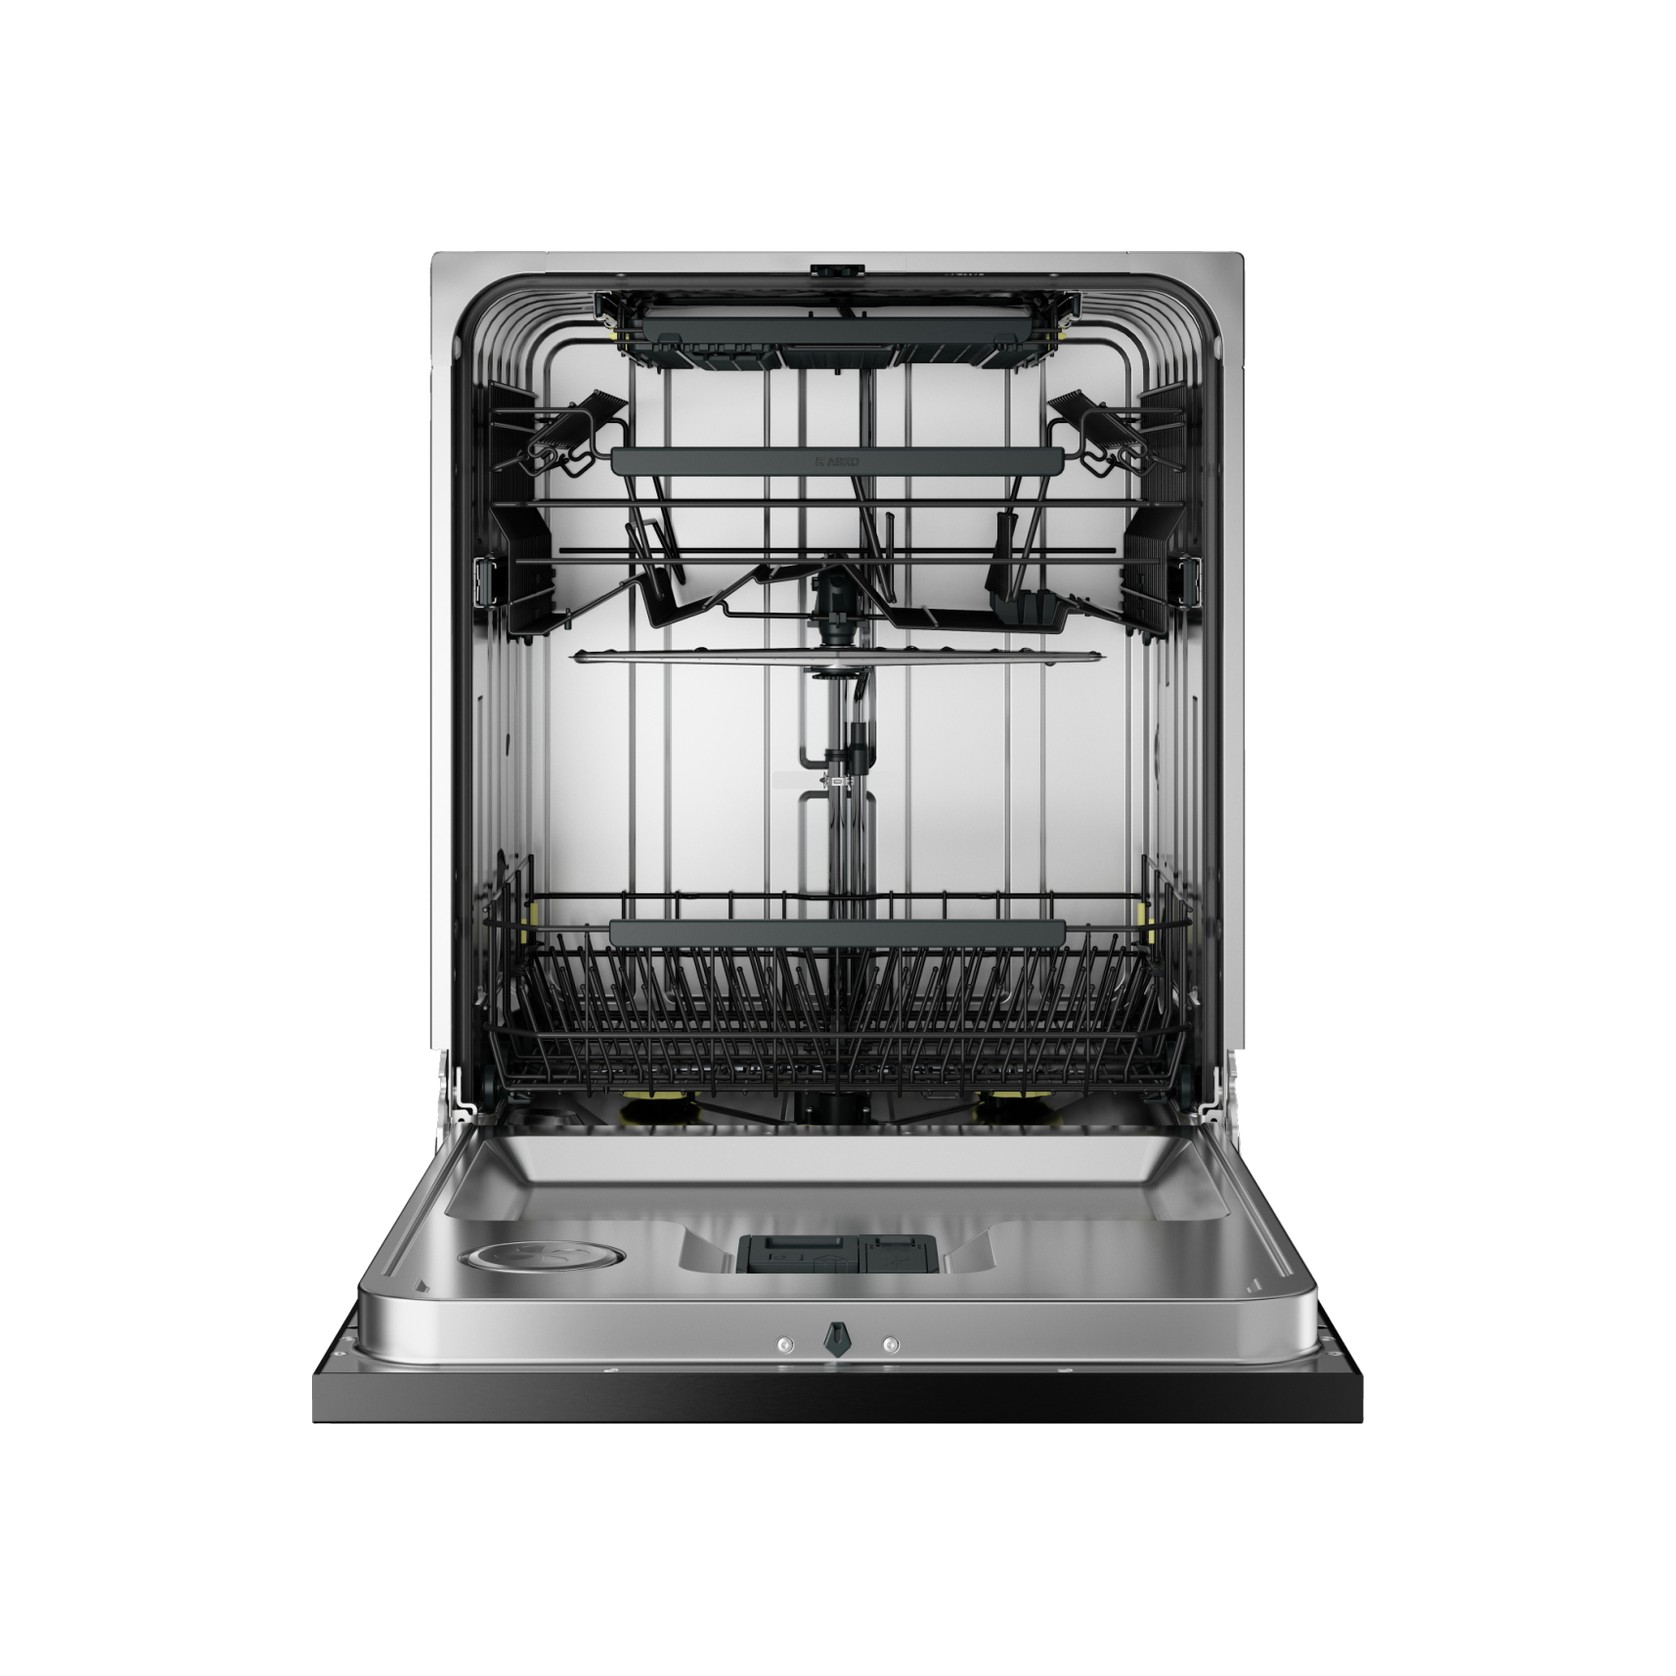 82cm Dishwasher BI 
16pl Classic Black Steel gallery detail image